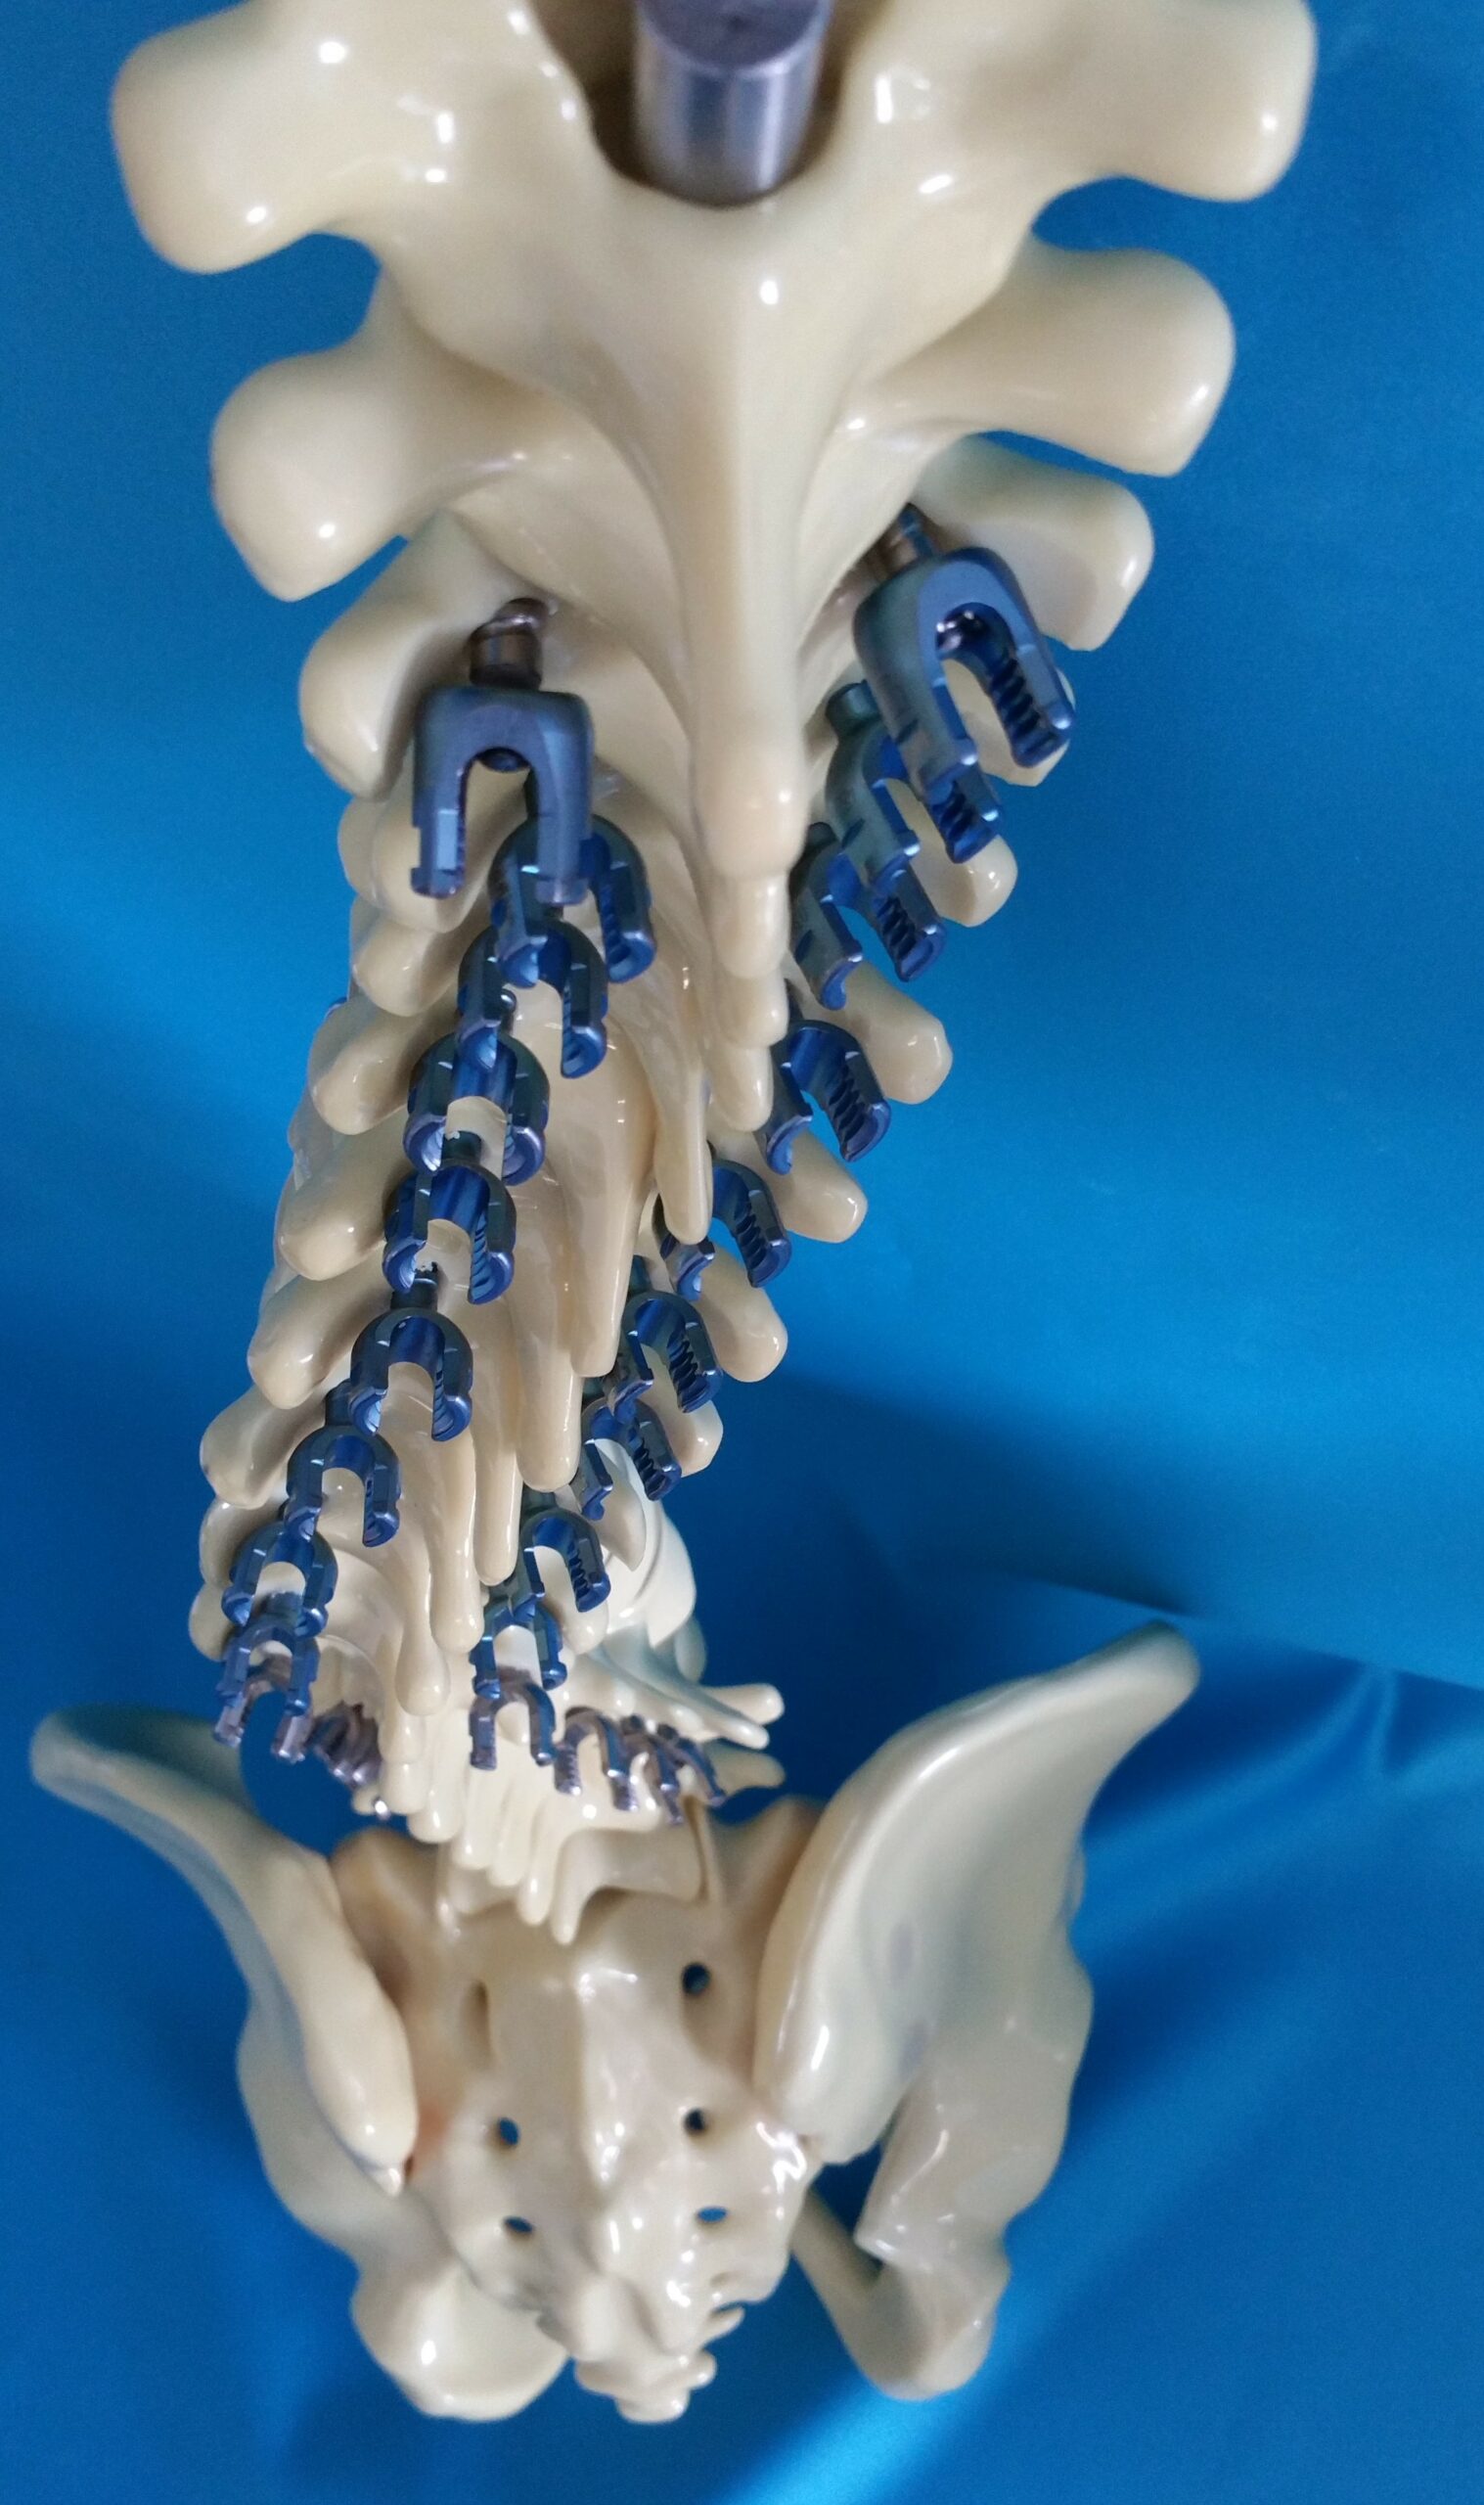 Flexbone Full Spine Replaceable Pedicle Screw Model Encoris 1 scaled